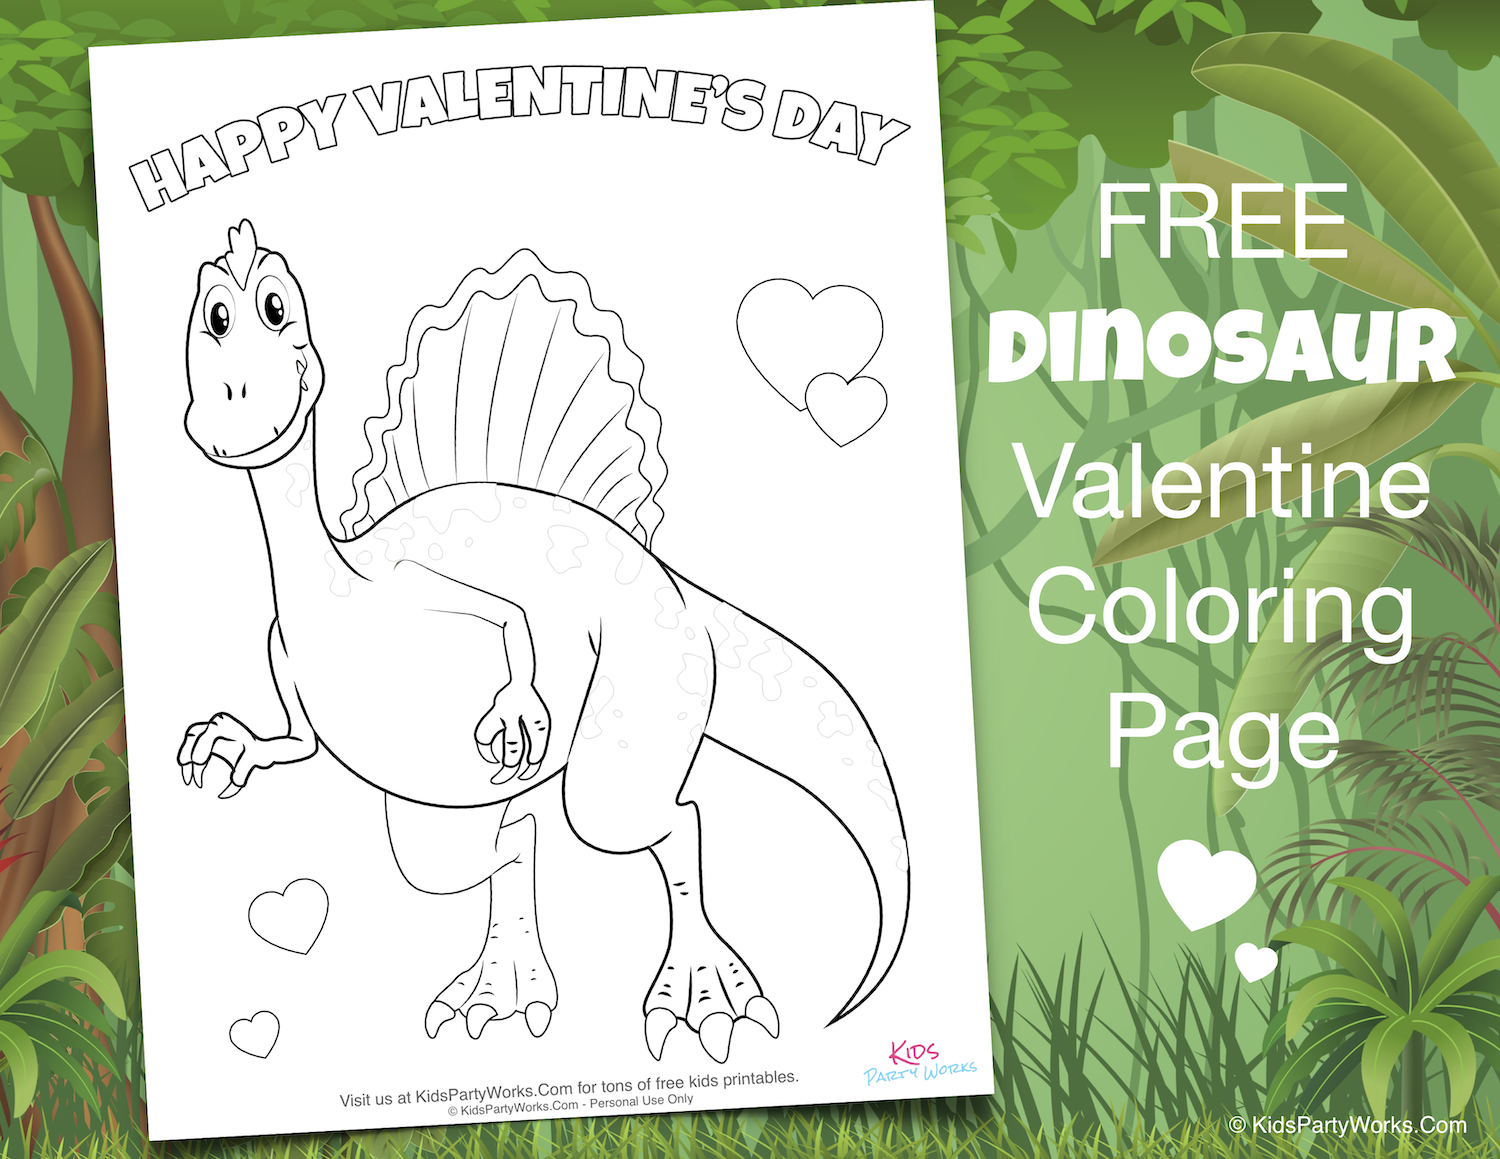 Free Valentine Dinosaur Coloring Page. Visit KidsPartyWorks.Com for tons of free kids printables.